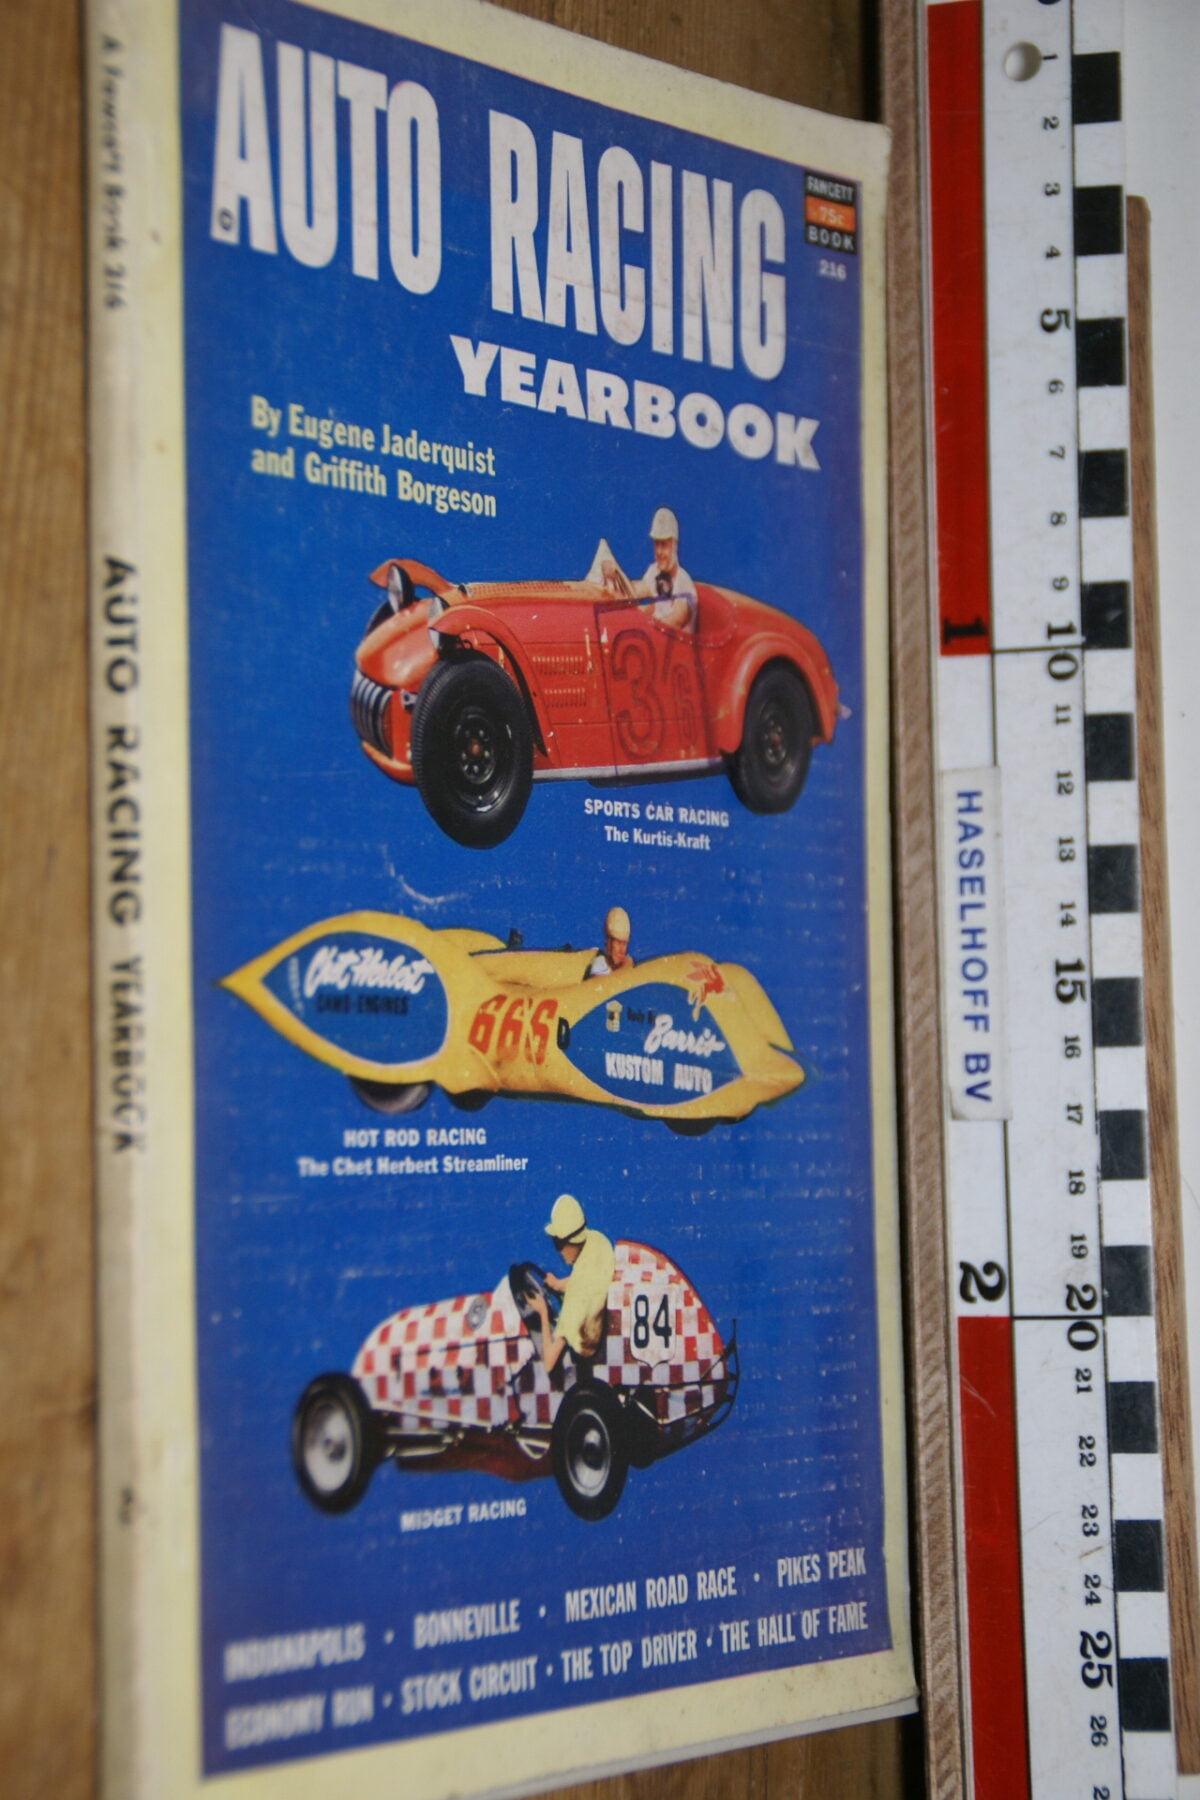 DSC02890 60er jaren auto racing yearbook, English-3a1db7cc